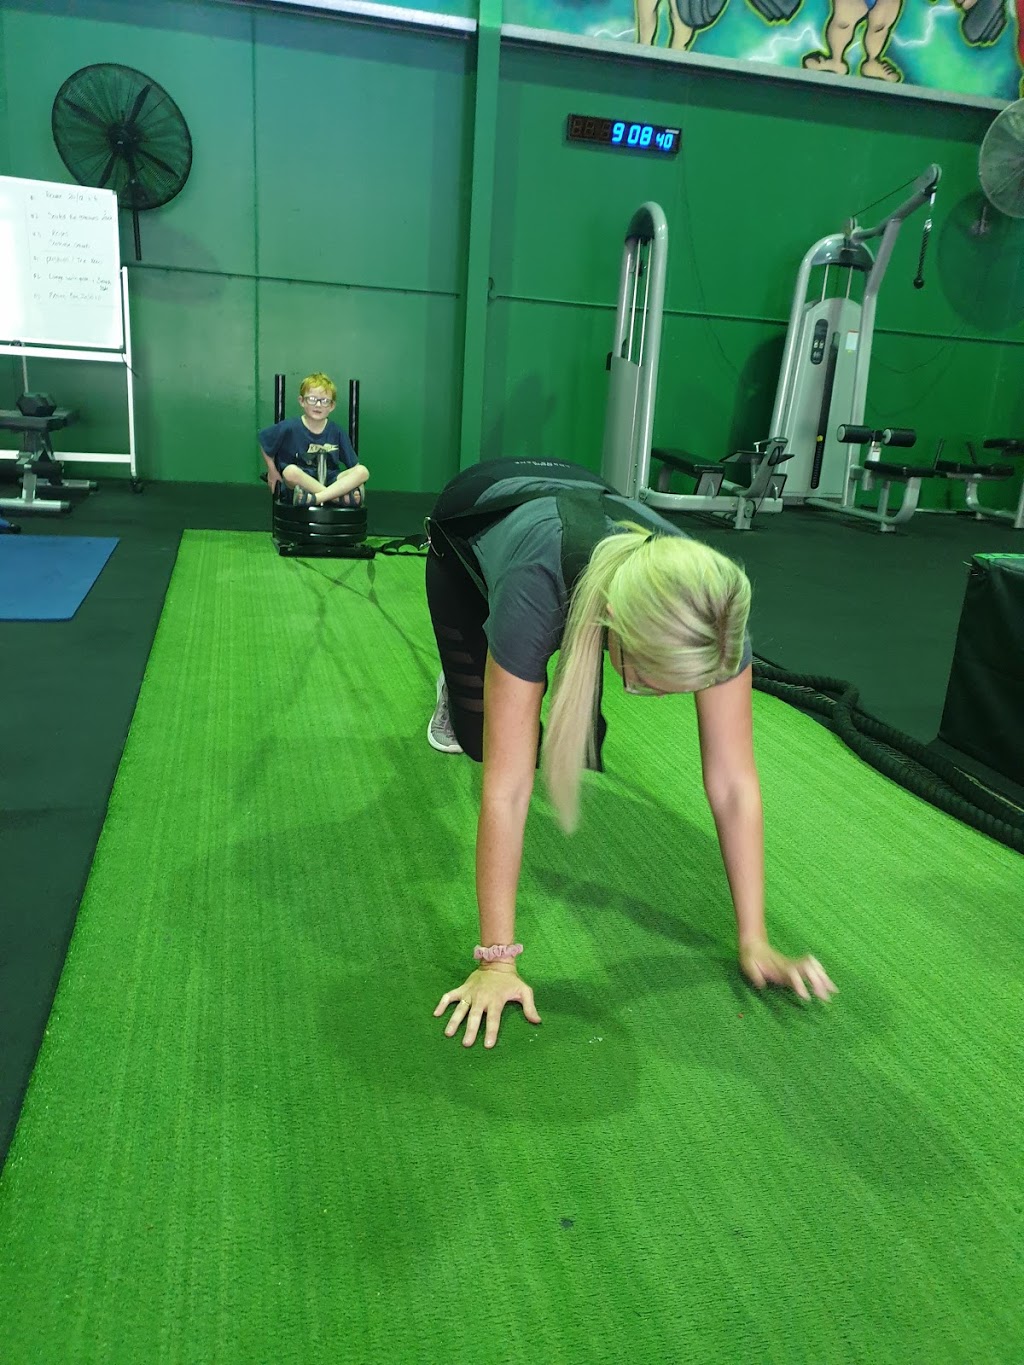 Fitness Manouvers - personal training Lismore | gym | 10 Garden St, Lismore NSW 2480, Australia | 0424196060 OR +61 424 196 060